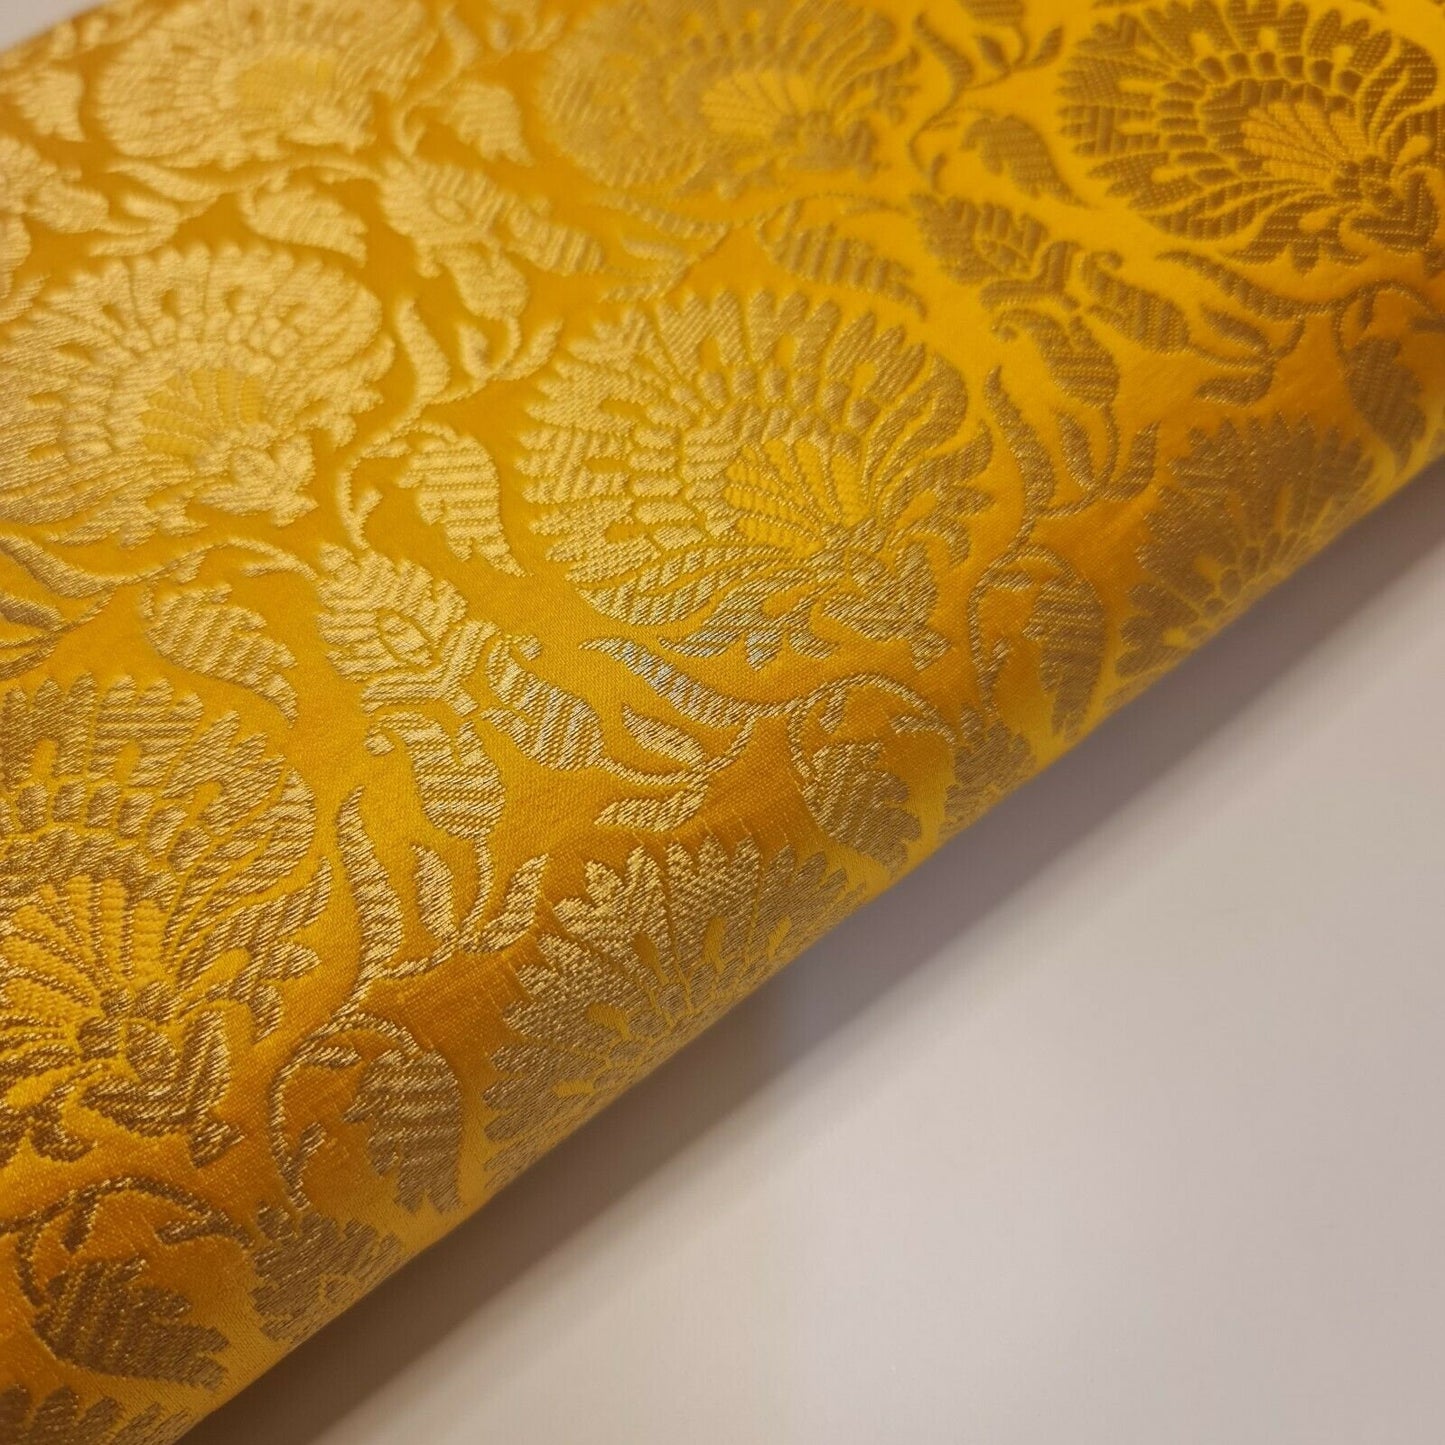 Ornamental Gold Metallic Floral Indian Banarasi Brocade Fabric By 1/2 Meter 44"